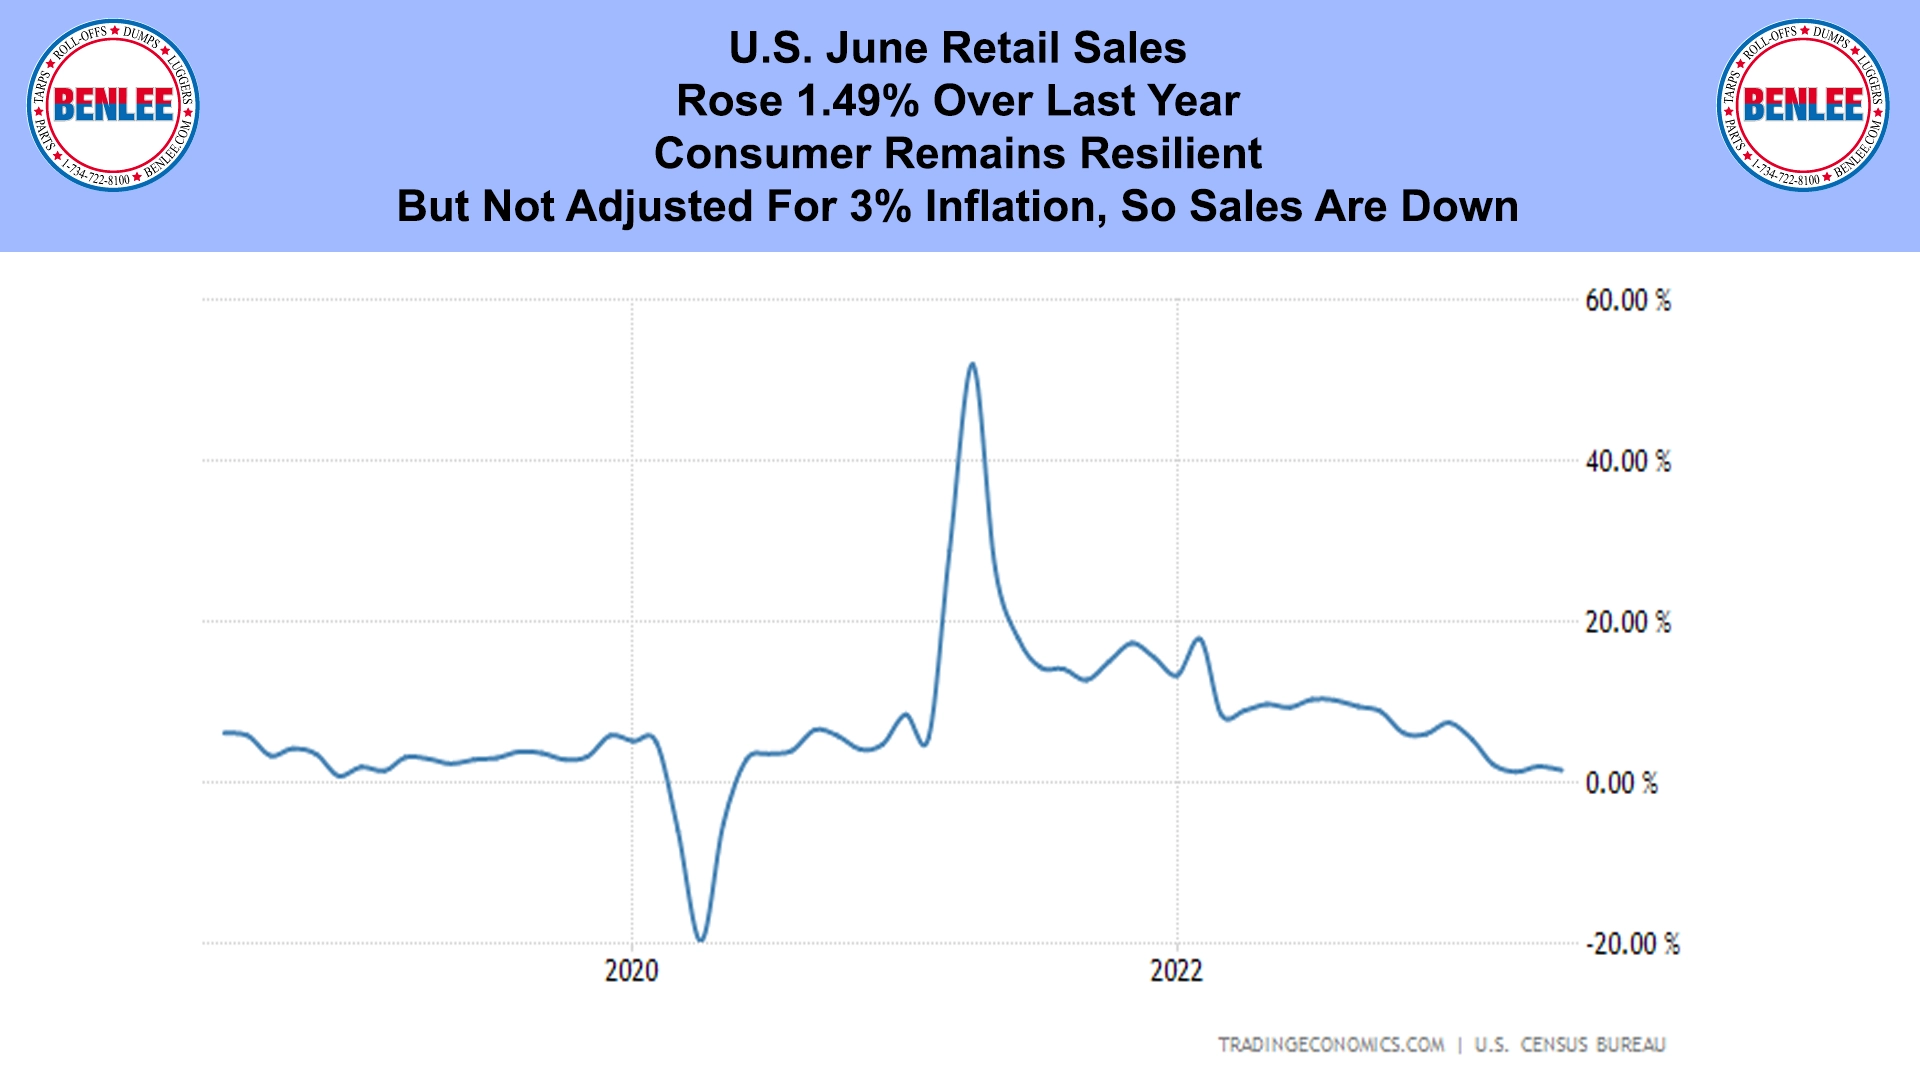 U.S. June Retail Sales